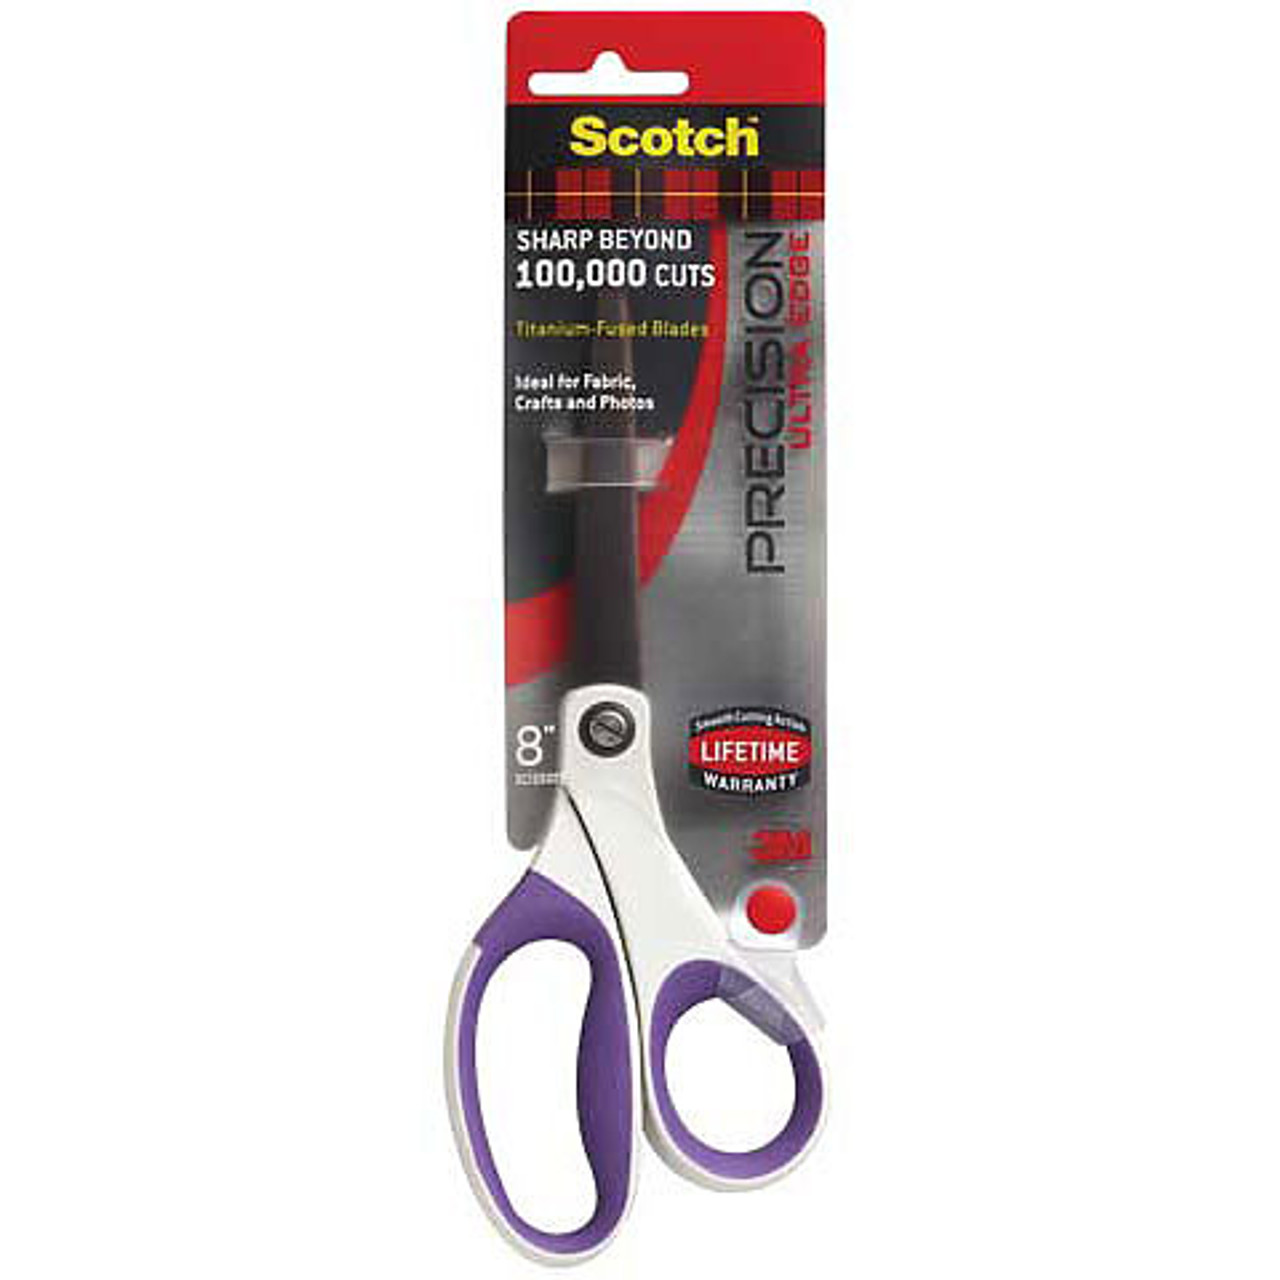 3M Scotch Precision Ultra Edge 8 Scissor, 3-count 